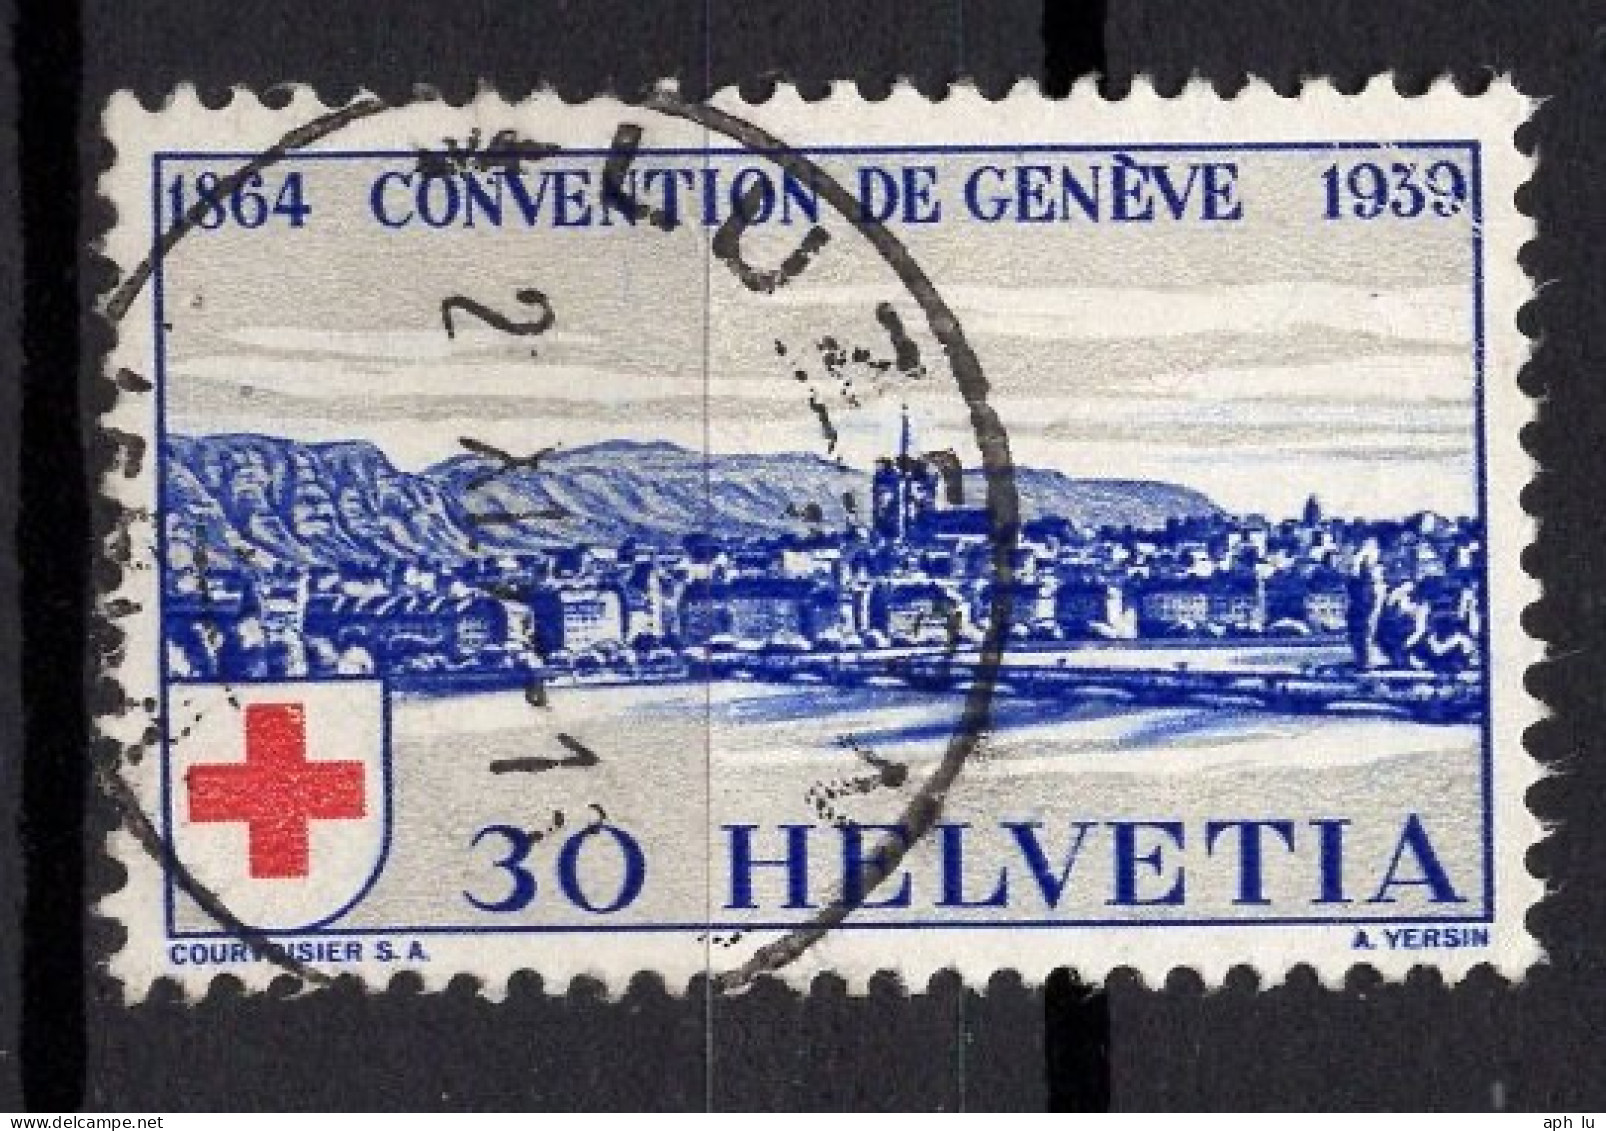 Marke 1939 Gestempelt (i020701) - Used Stamps